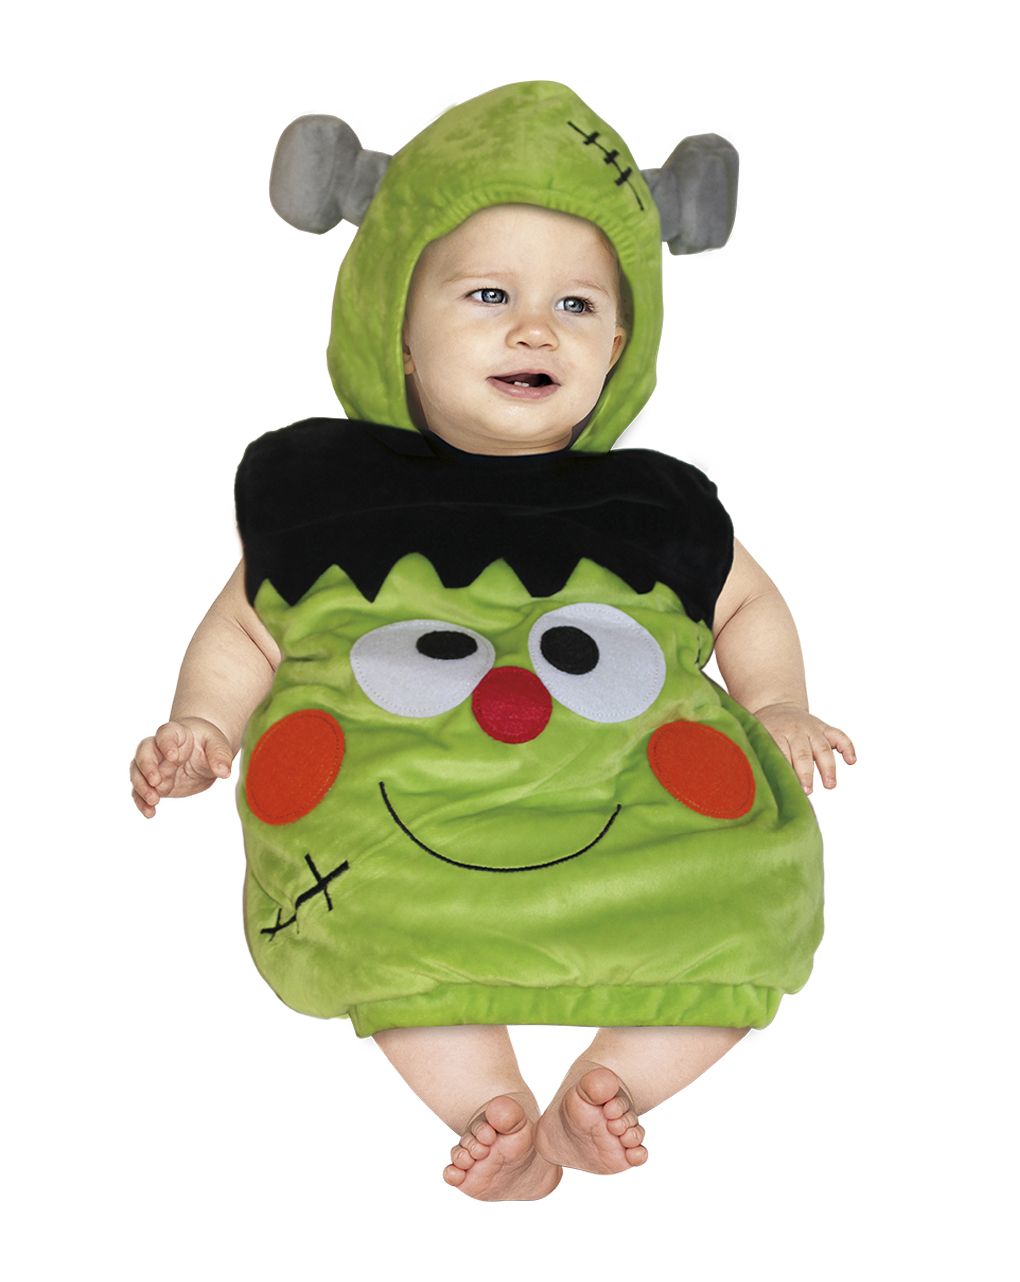 disfraz de halloween bebé ropa bebes 0 a 12 meses ropa de bebe recien  nacido 0